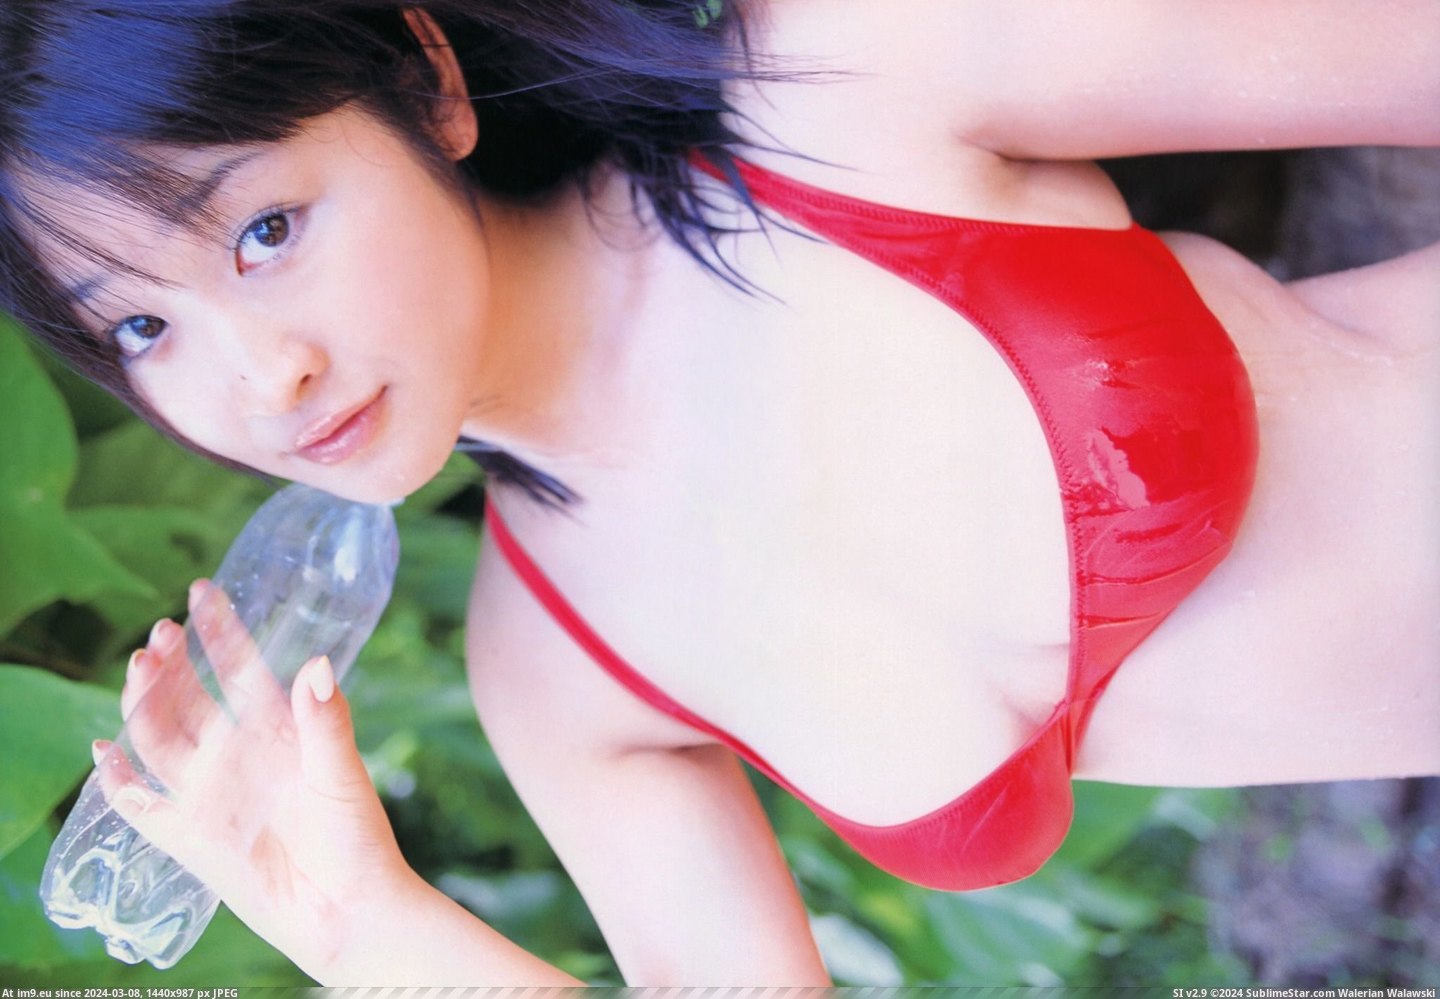 #Asian #Swimsuit #Shimamoto #Model #Risa Risa Shimamoto (2) (Asian Swimsuit Model) Pic. (Image of album Teen Asian Girls - Japanese Swimsuits Models))